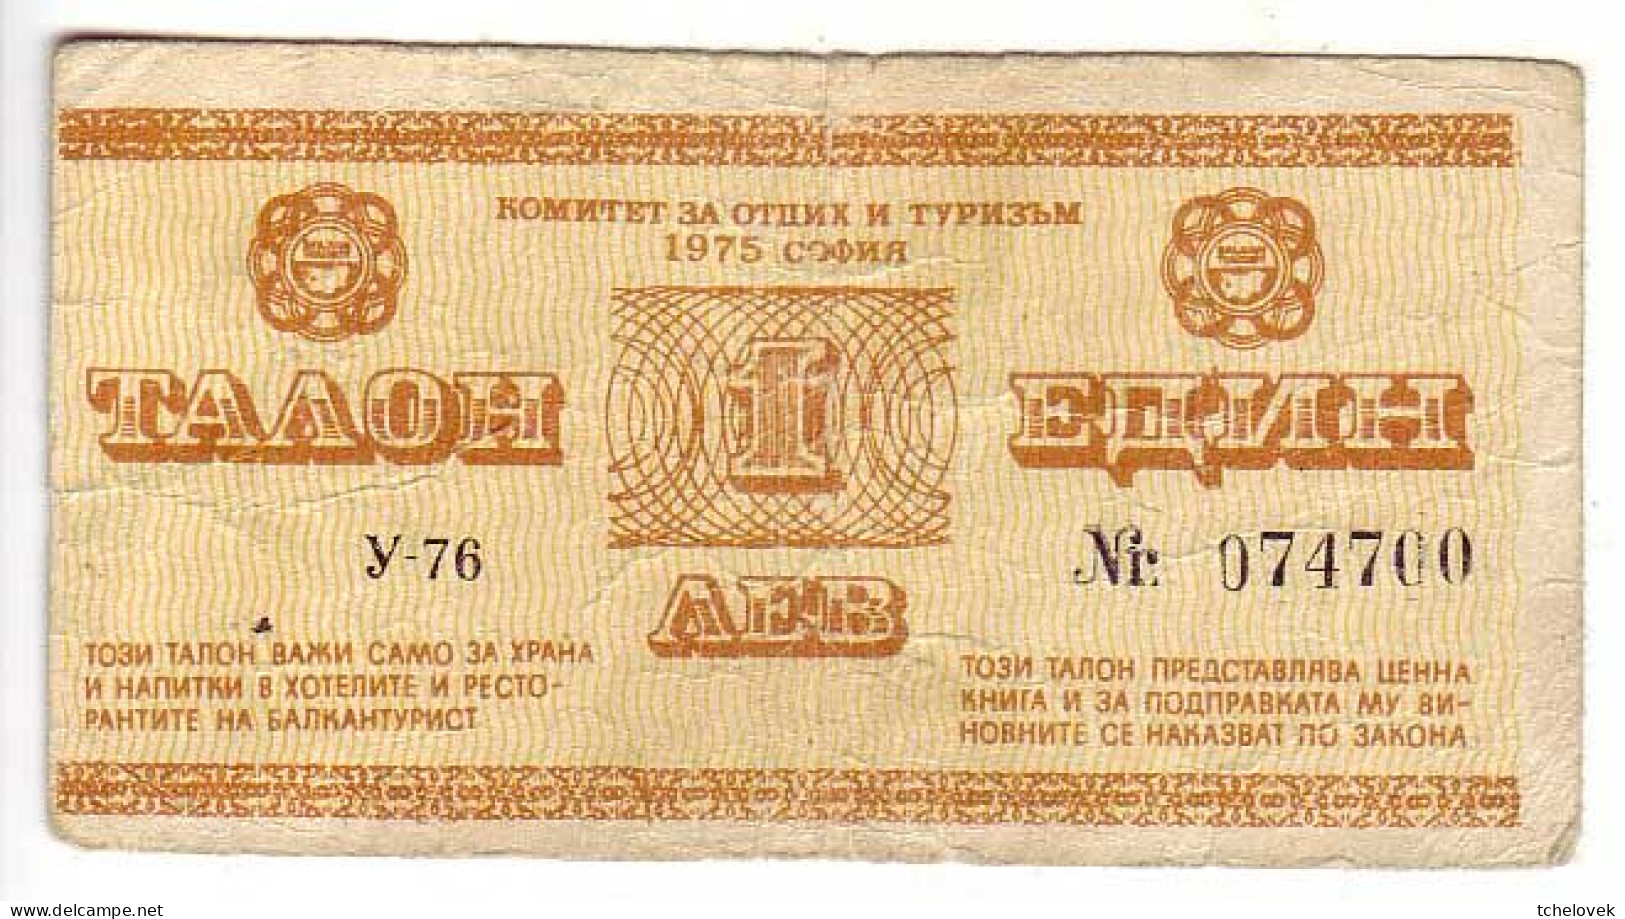 (Billets). Bulgarie Bulgaria. Foreing Exchange Certificate. Balkan Tourist. 1975. 1 Lev Ou-76 N° 074700 Fancy Number - Bulgarien